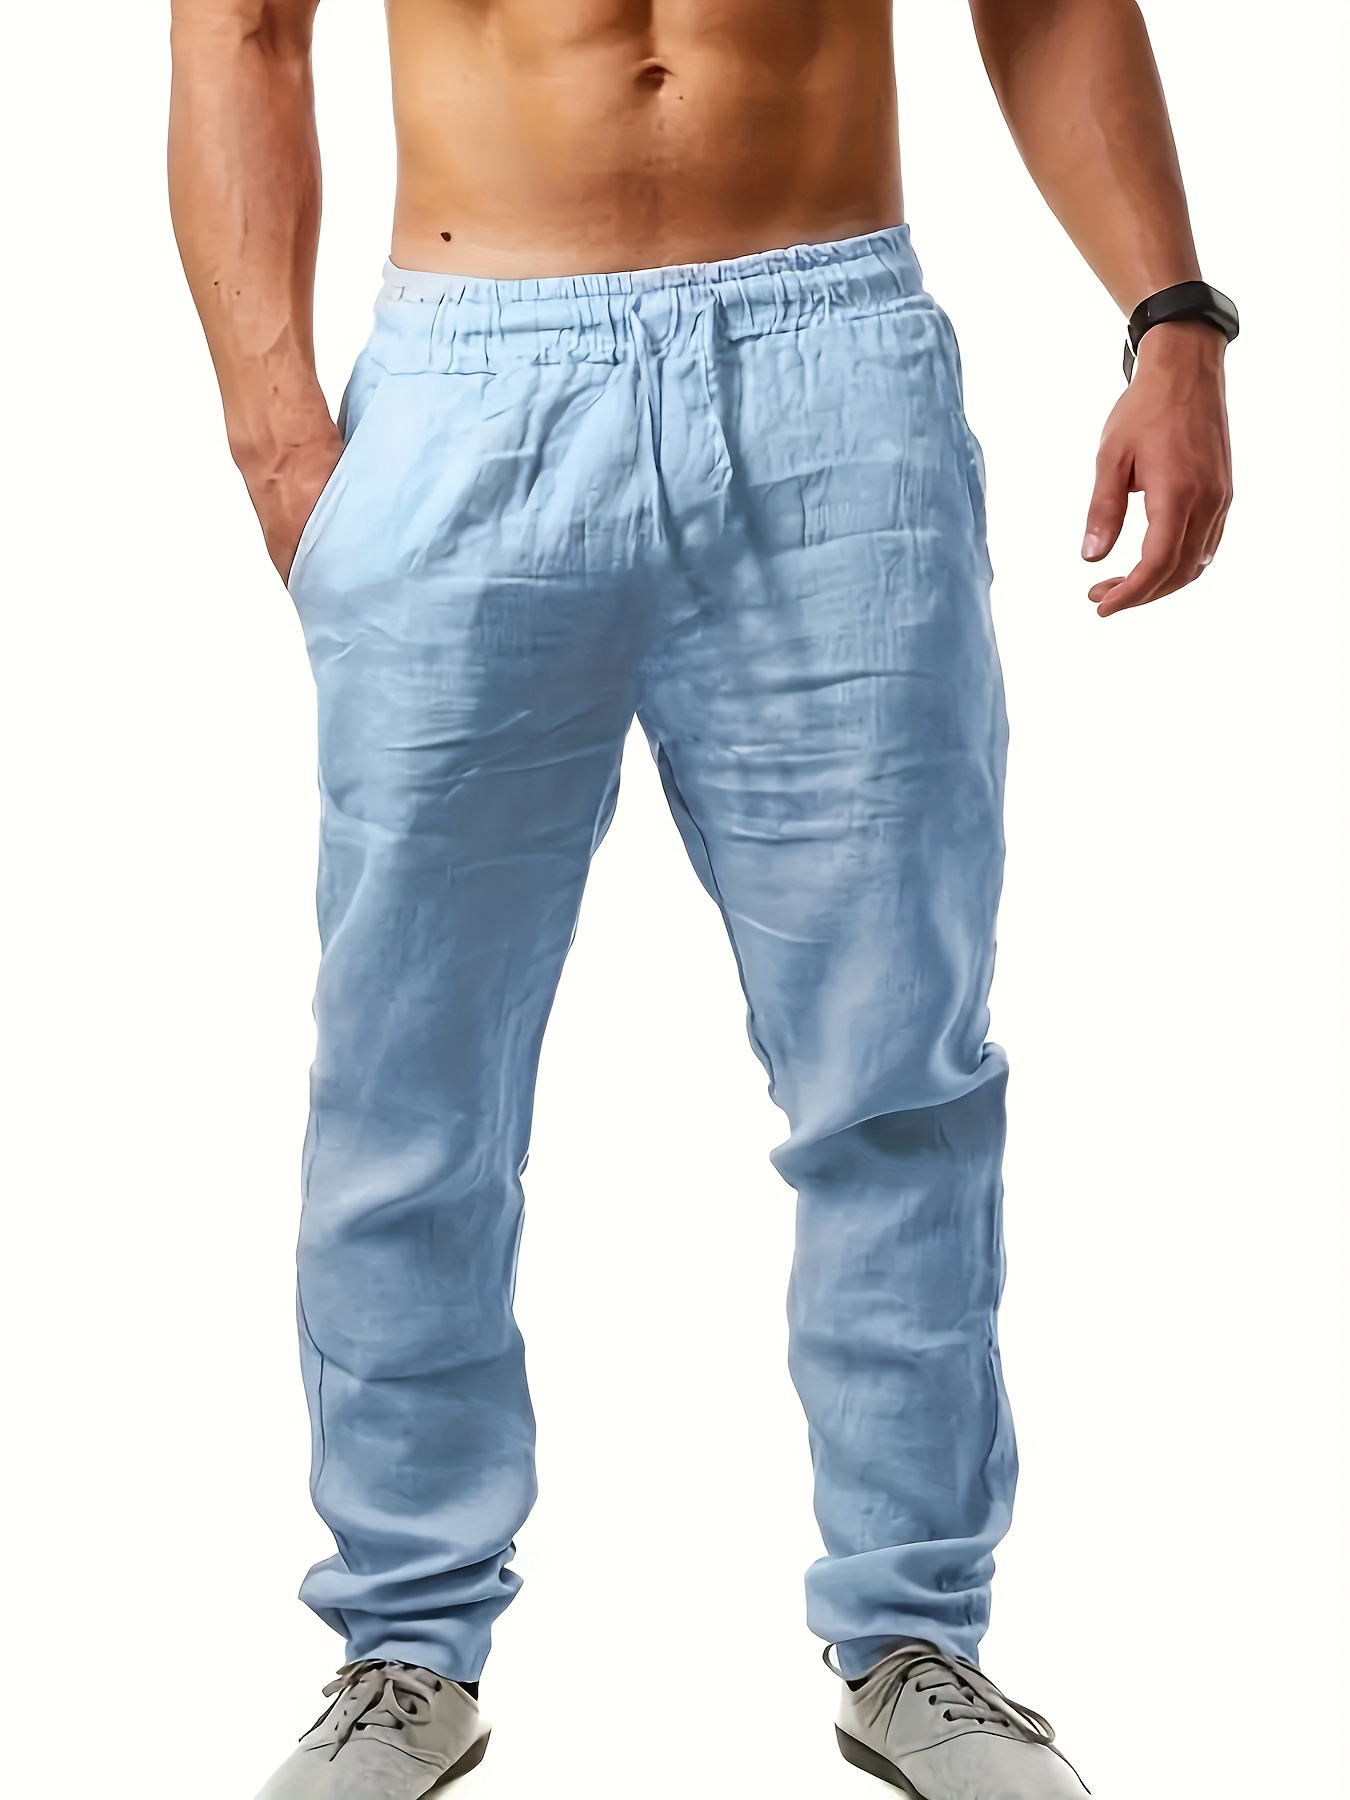 Light Blue Pants For Men Male Casual Solid Pant Short Full Length Straight  Pant Short Drawstring Pocket Fashion Pant Trousers 